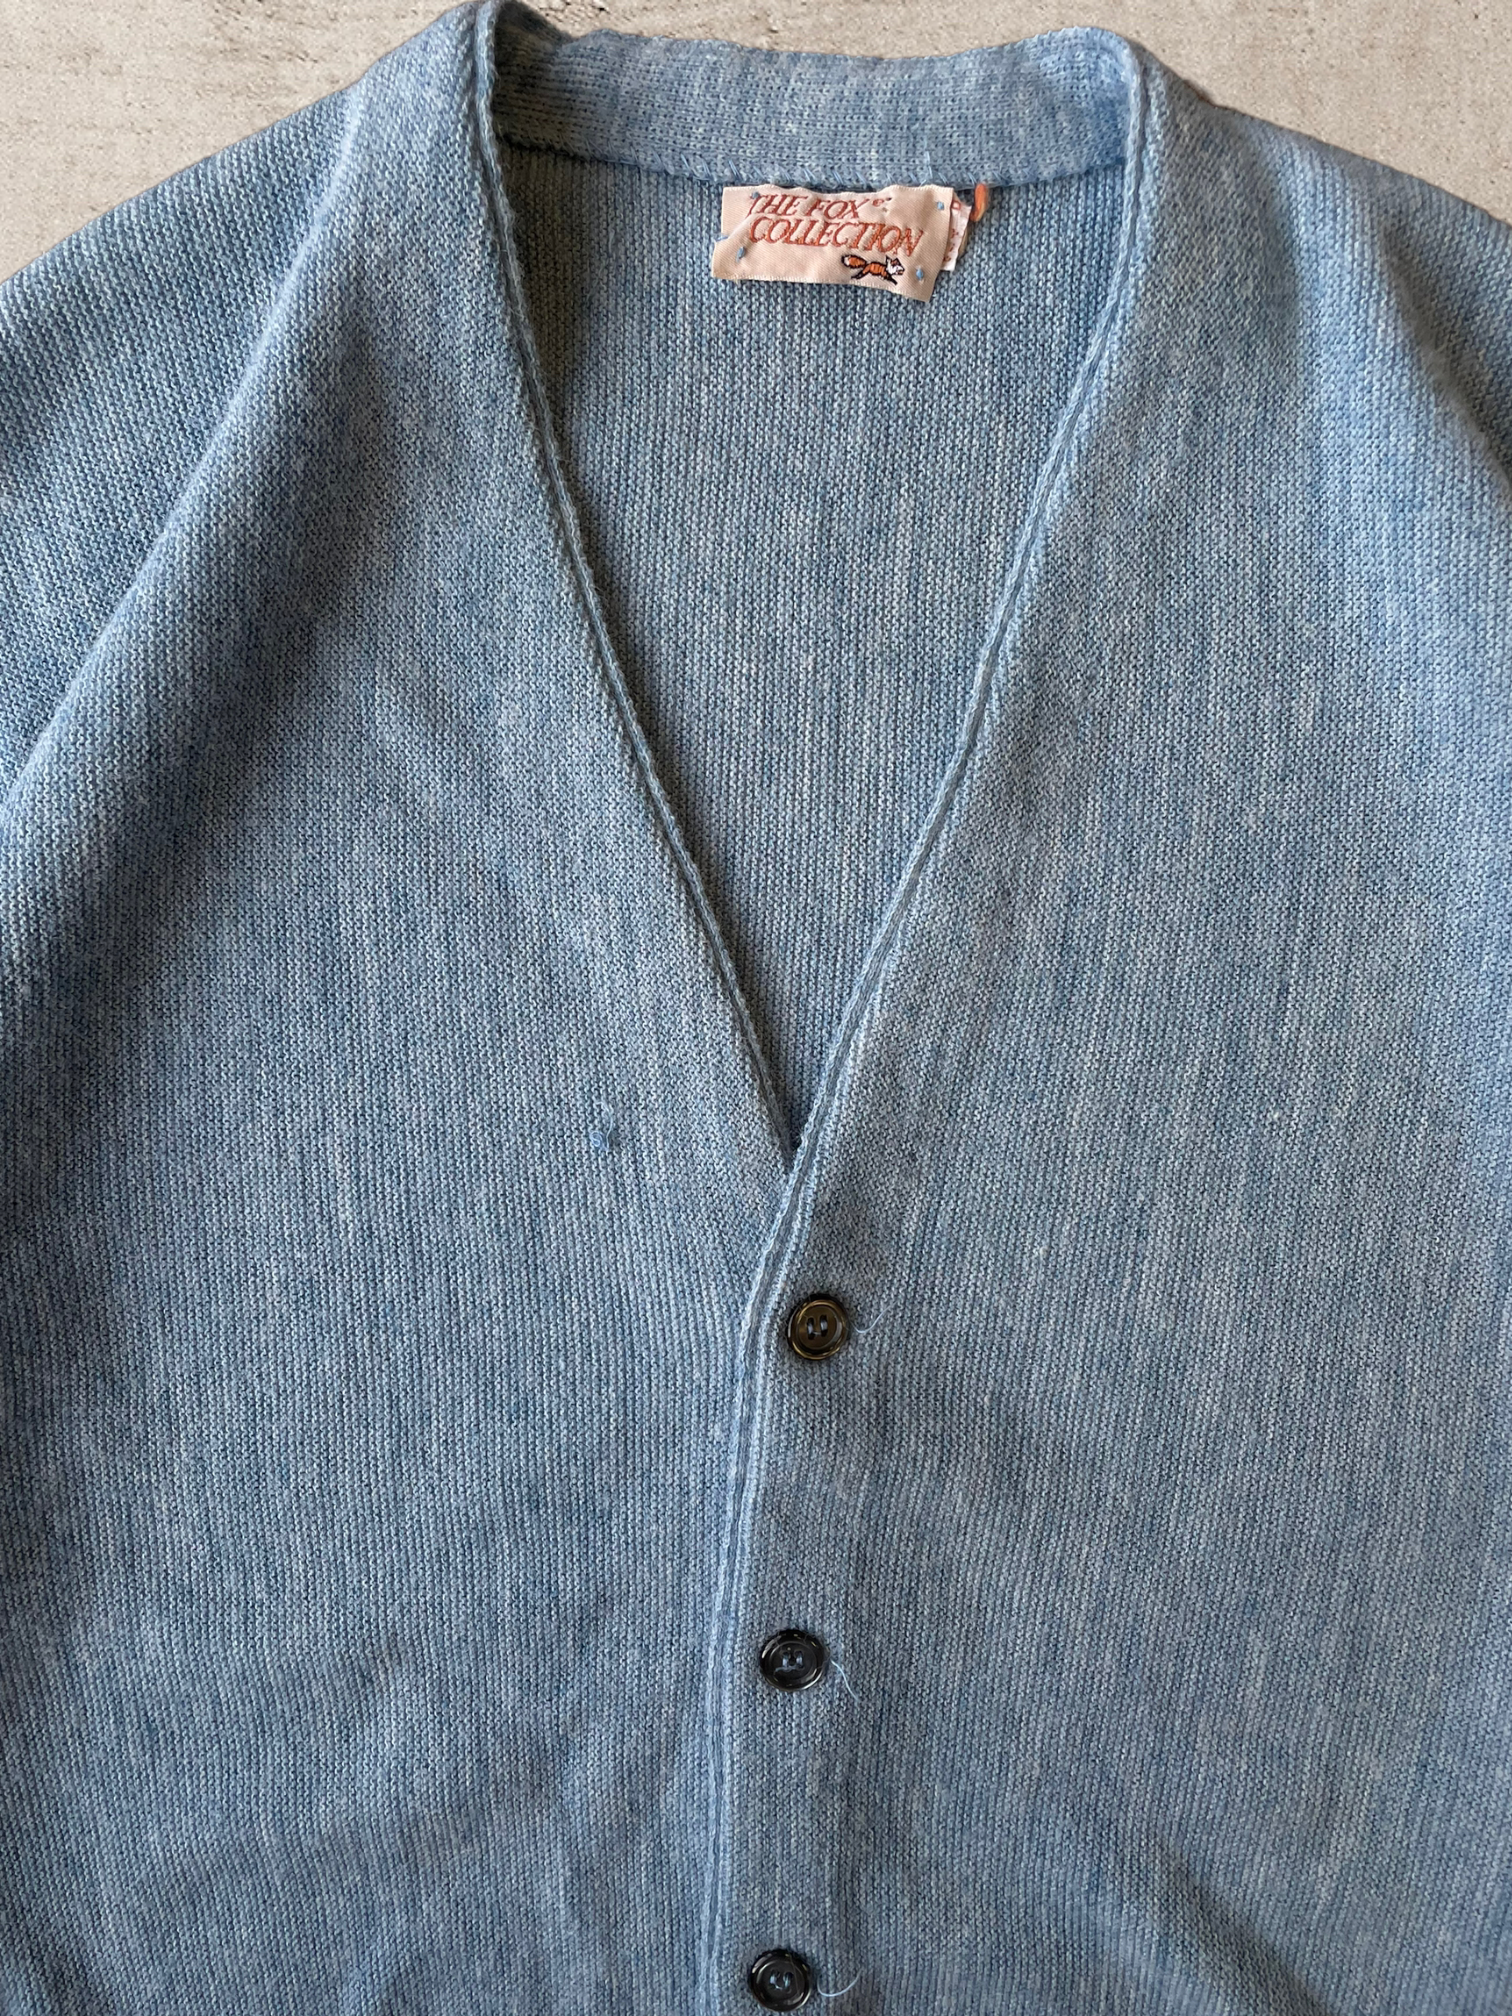 80s Baby Blue Knit Cardigan - XL